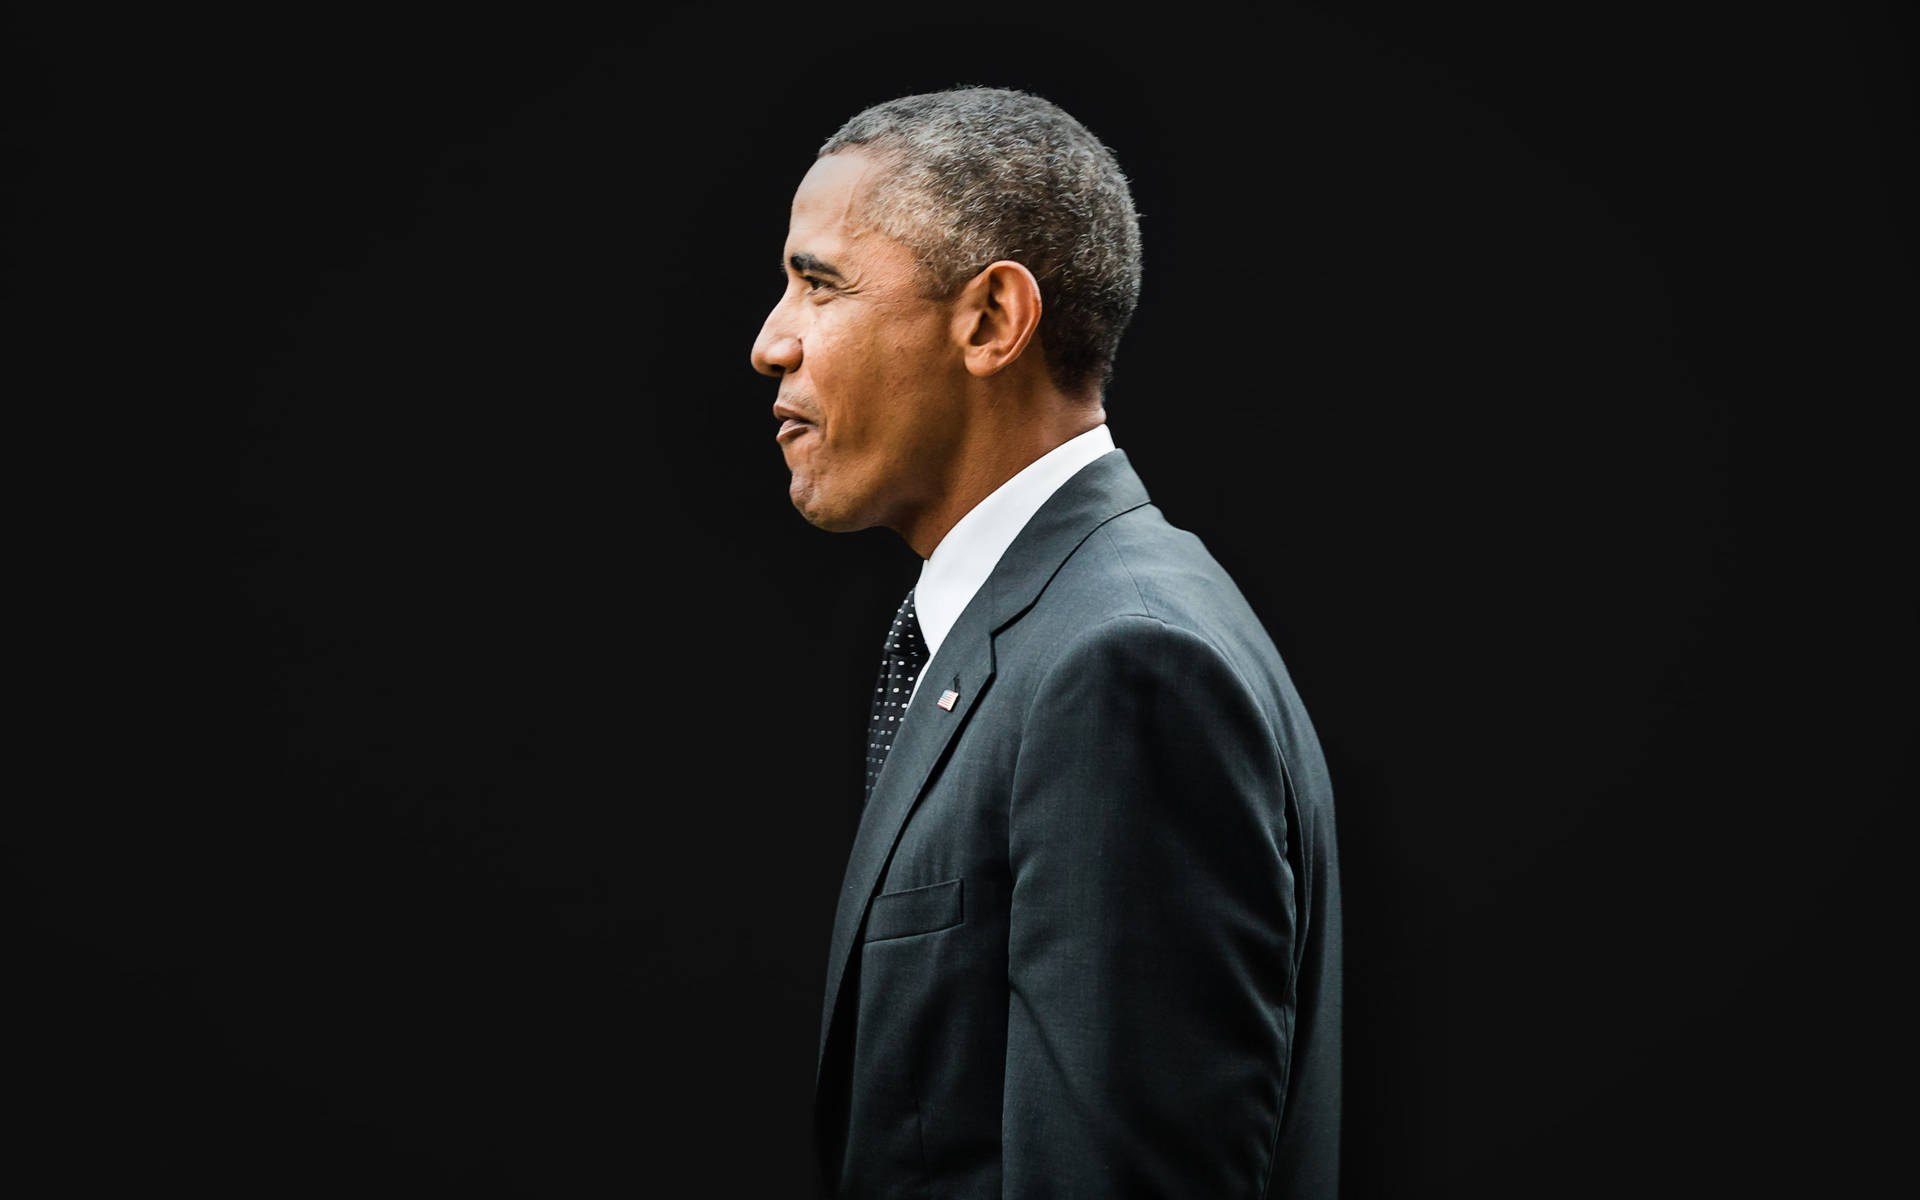 Barack Obama Side View Photograph Background